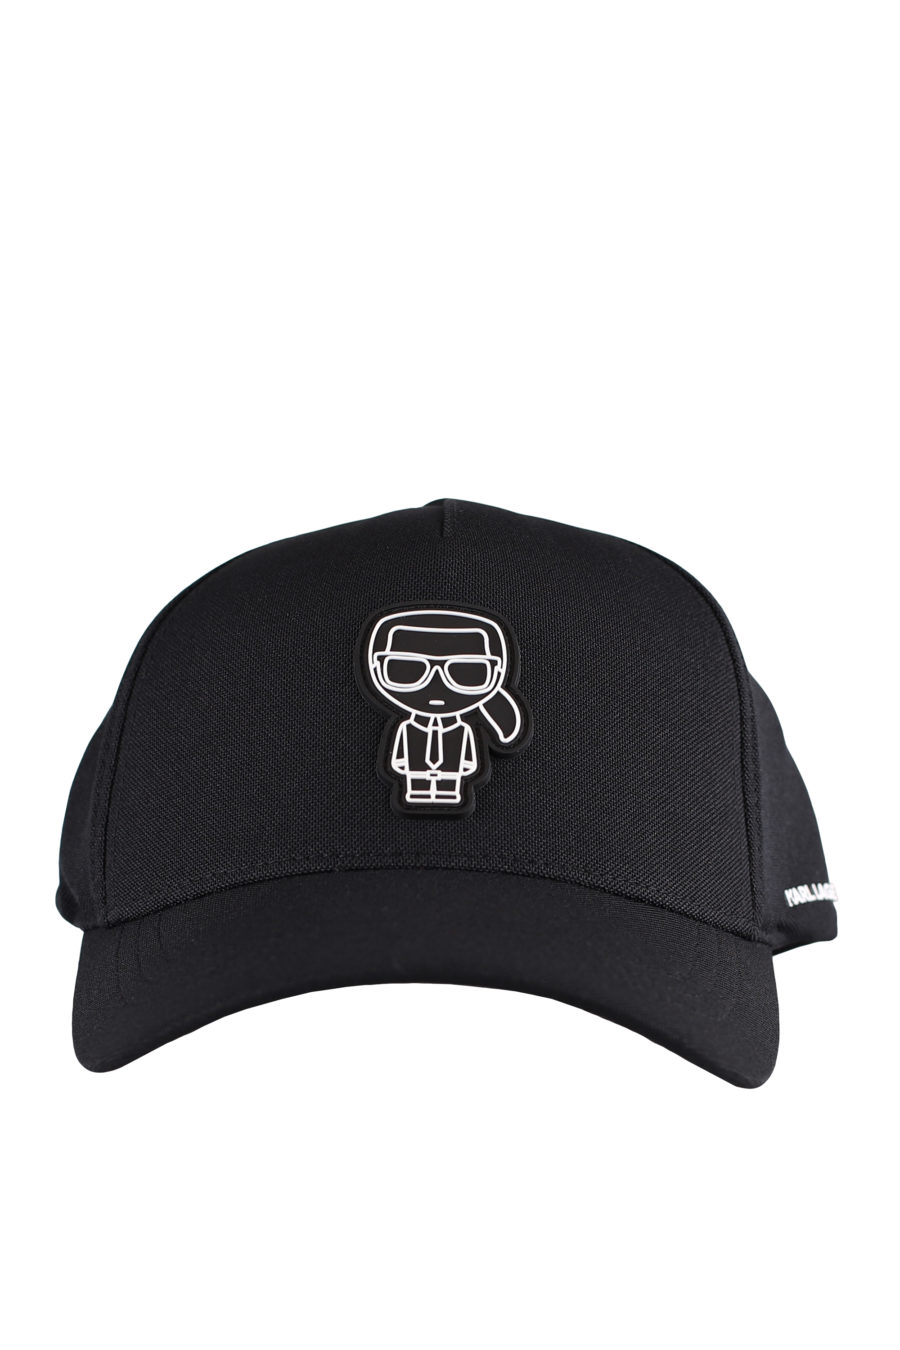 Gorra negra con "Karl" engomado en blanco - IMG 9601